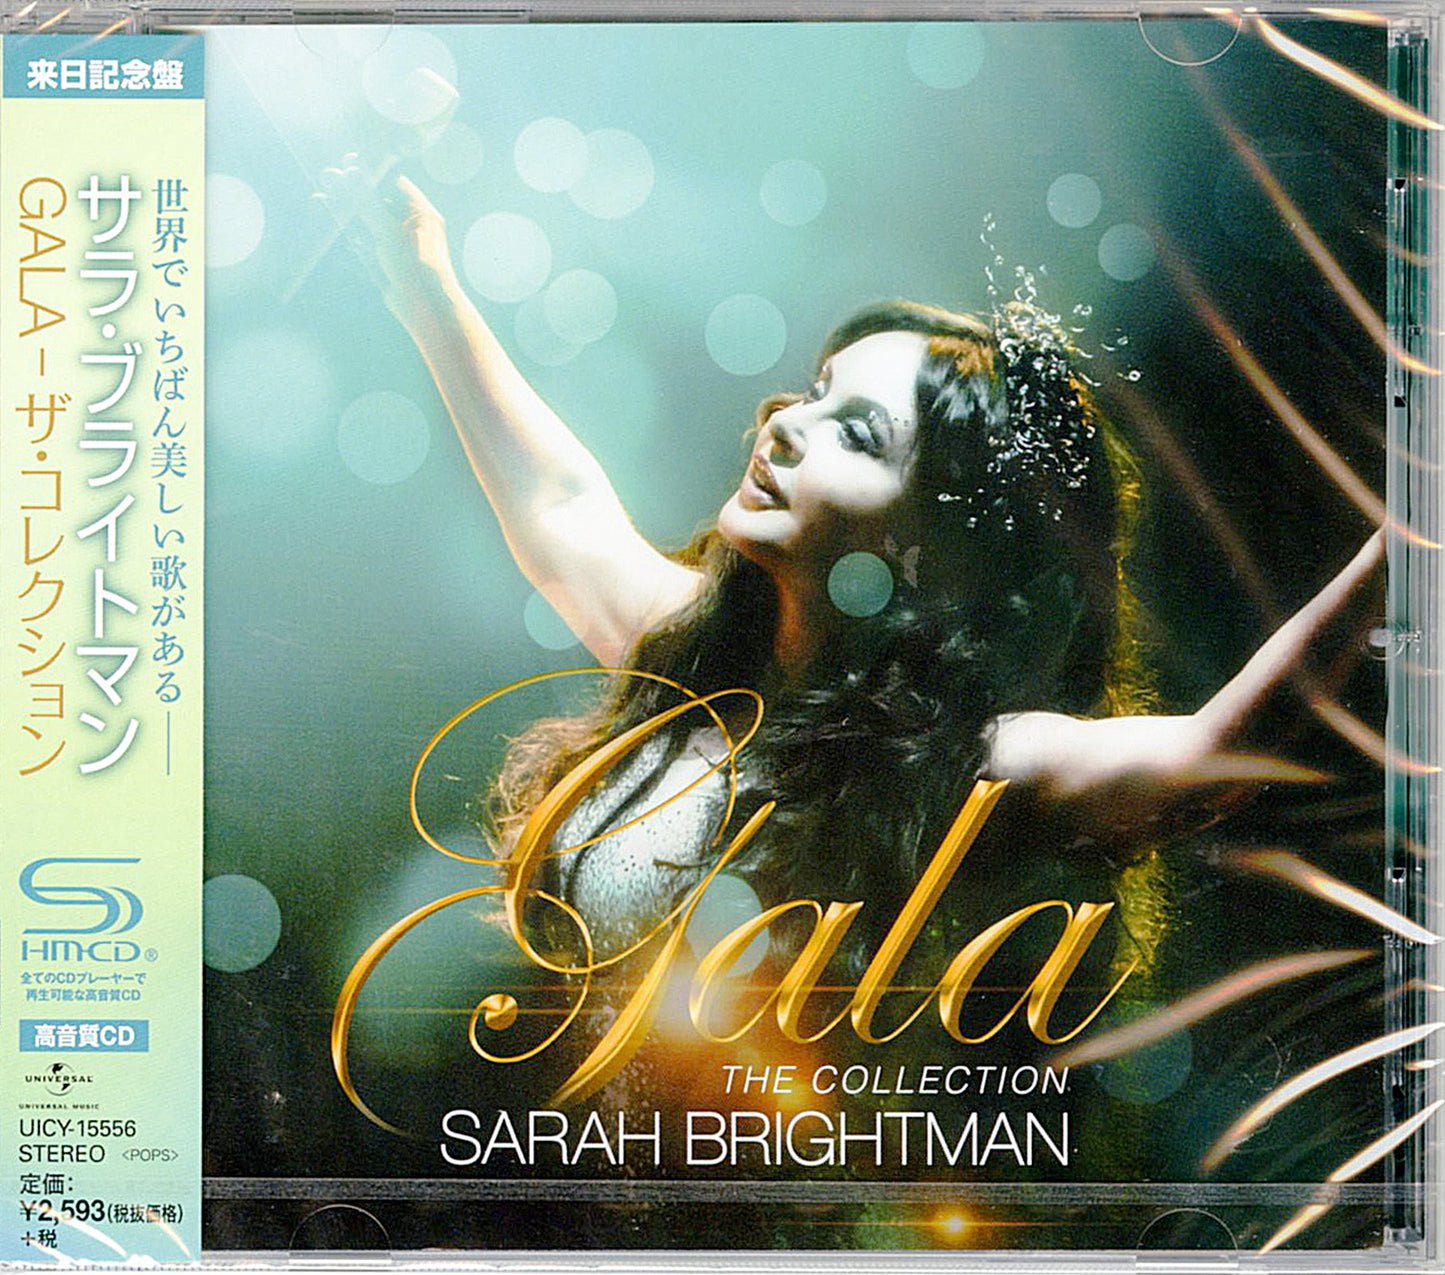 Sarah Brightman - Gala The Collection - Japan  SHM-CD Bonus Track